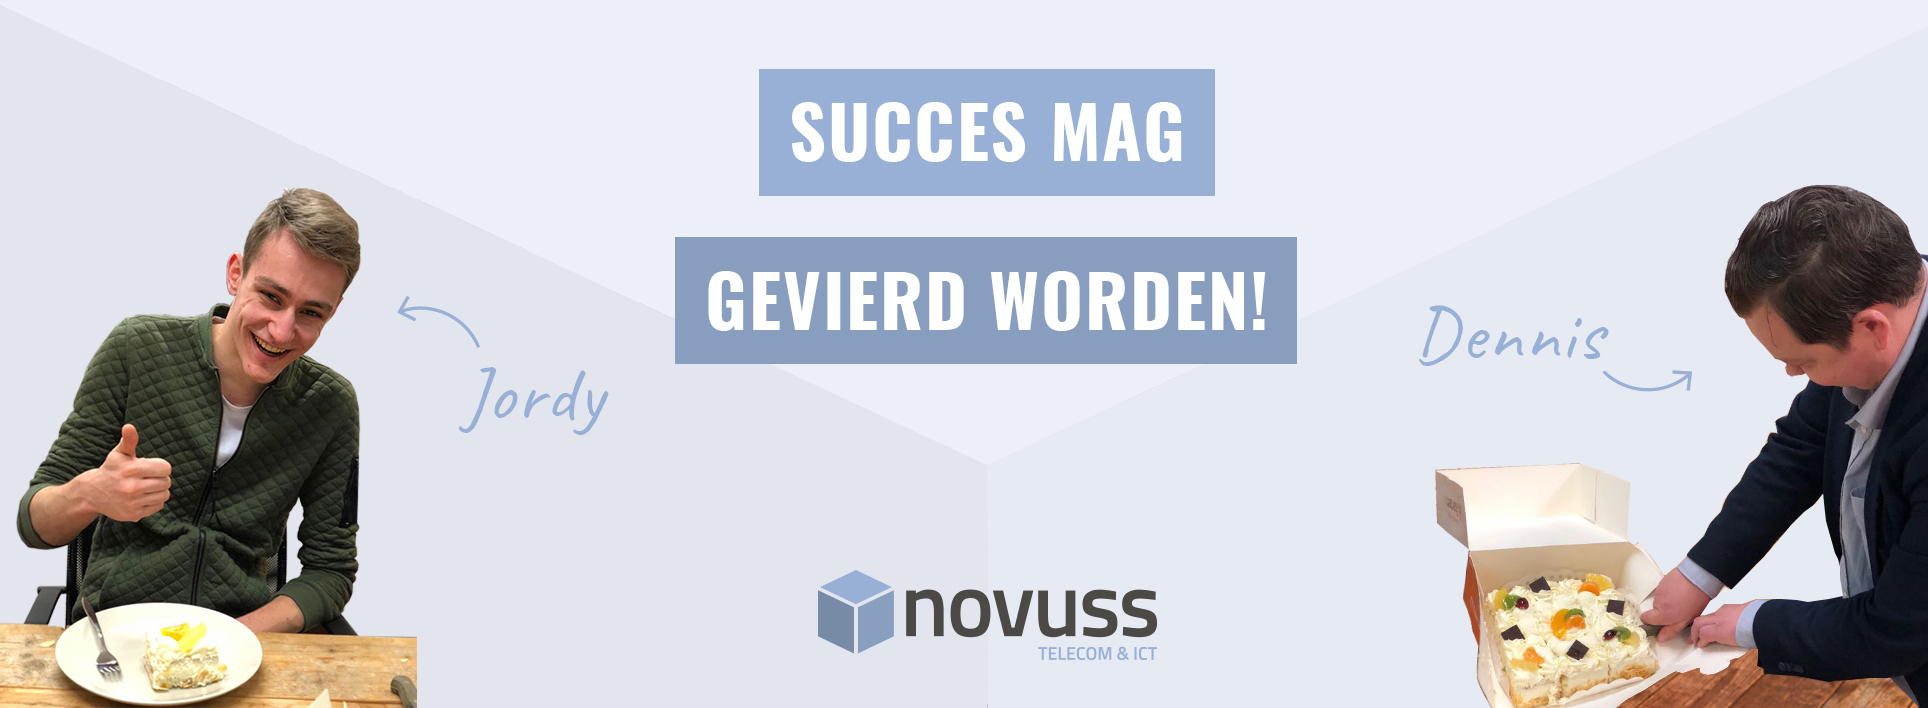 Novuss Telecom & ICT viert succes